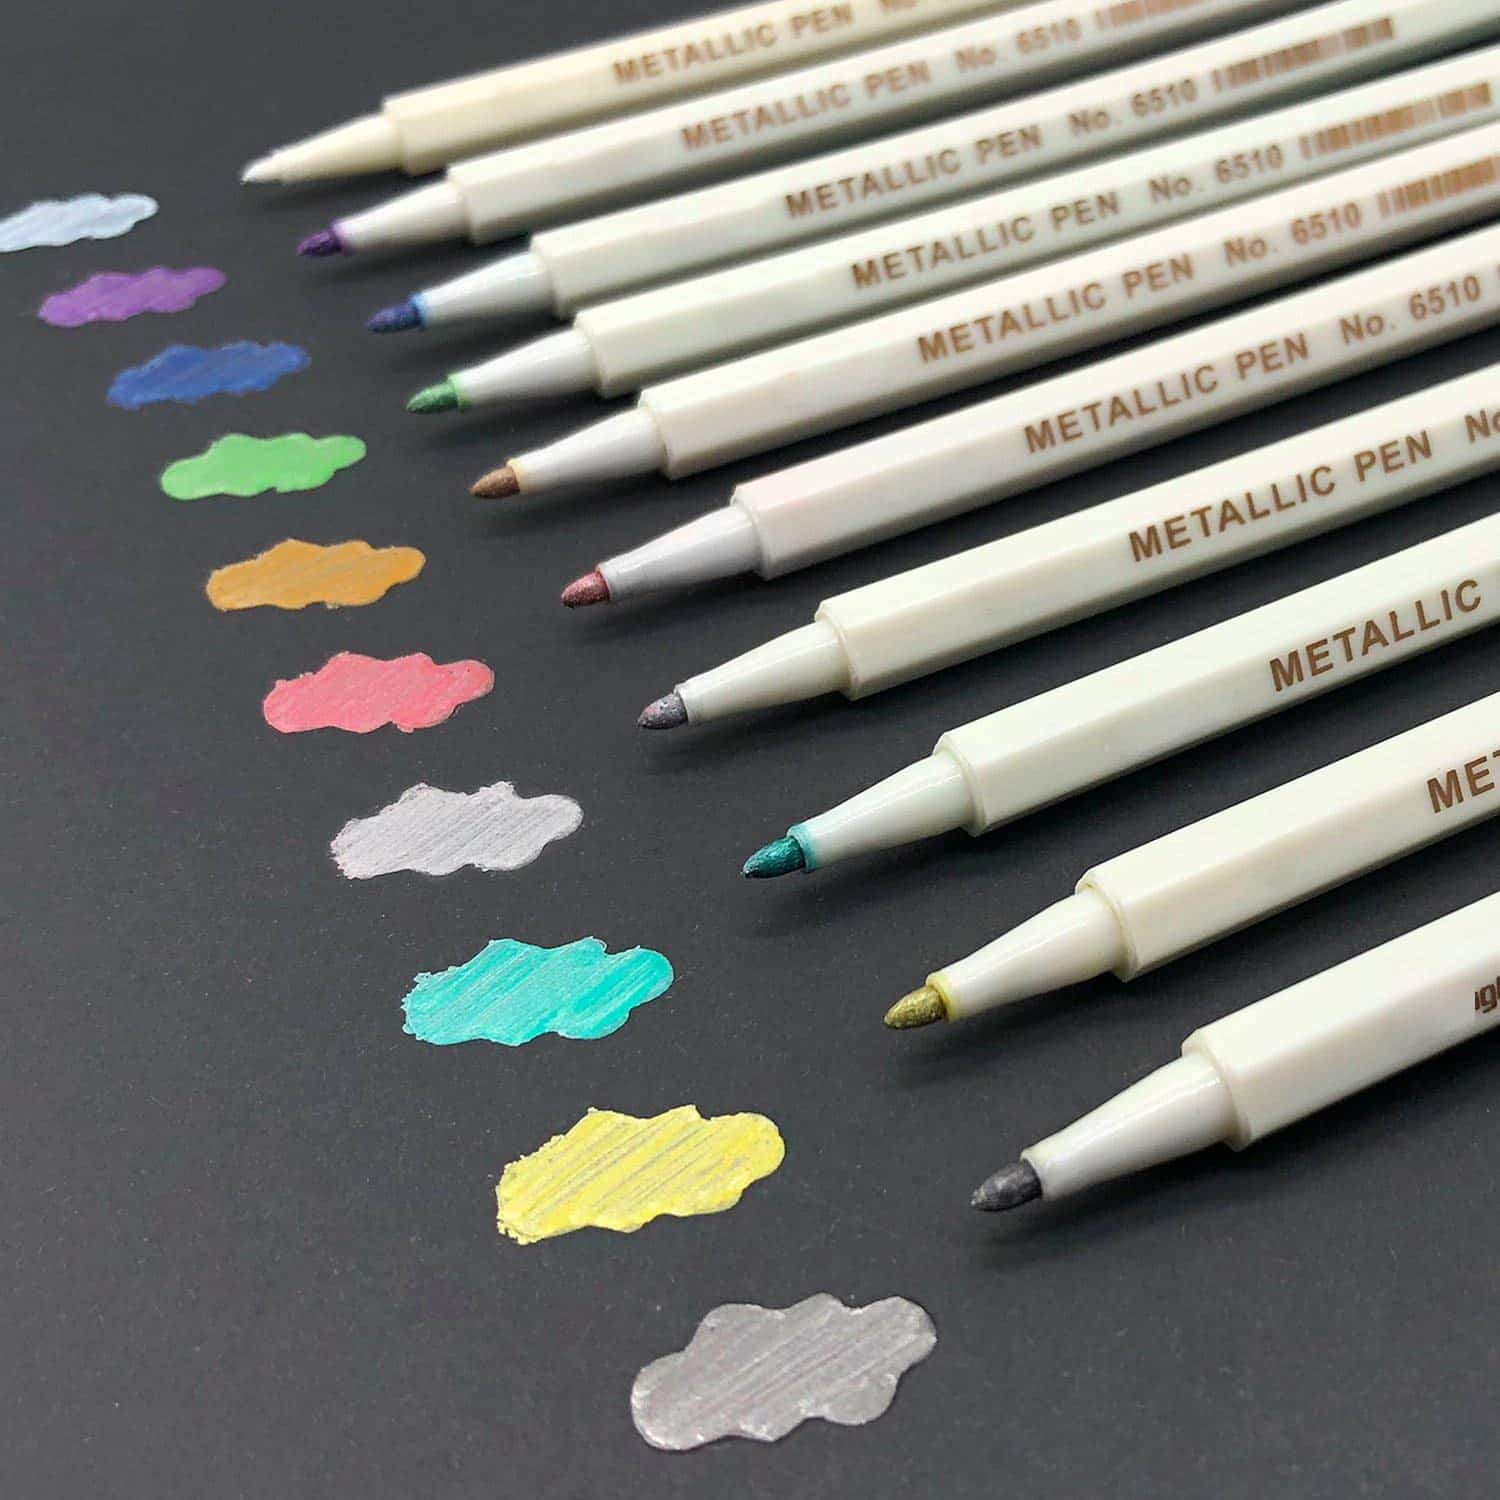 Gotideal Metallic Marker Pens, Set of 10 Assorted Colors for Scrapbook Photo Album, $9.99 (REG $19.99)